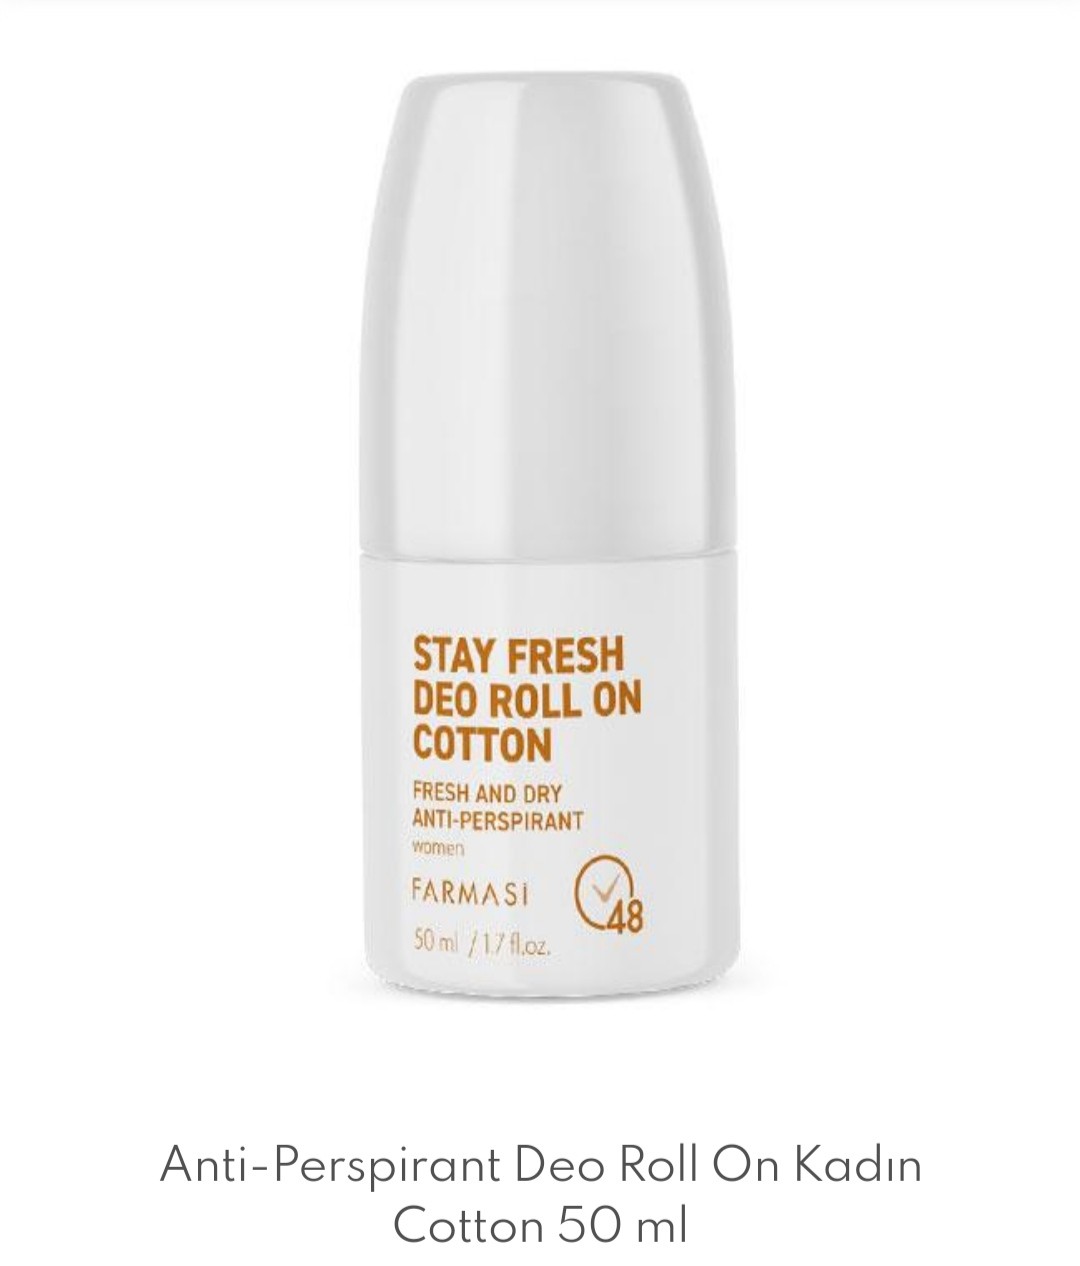 Anti-Perspirant Deo Roll On Kadın Cotton 50 ml